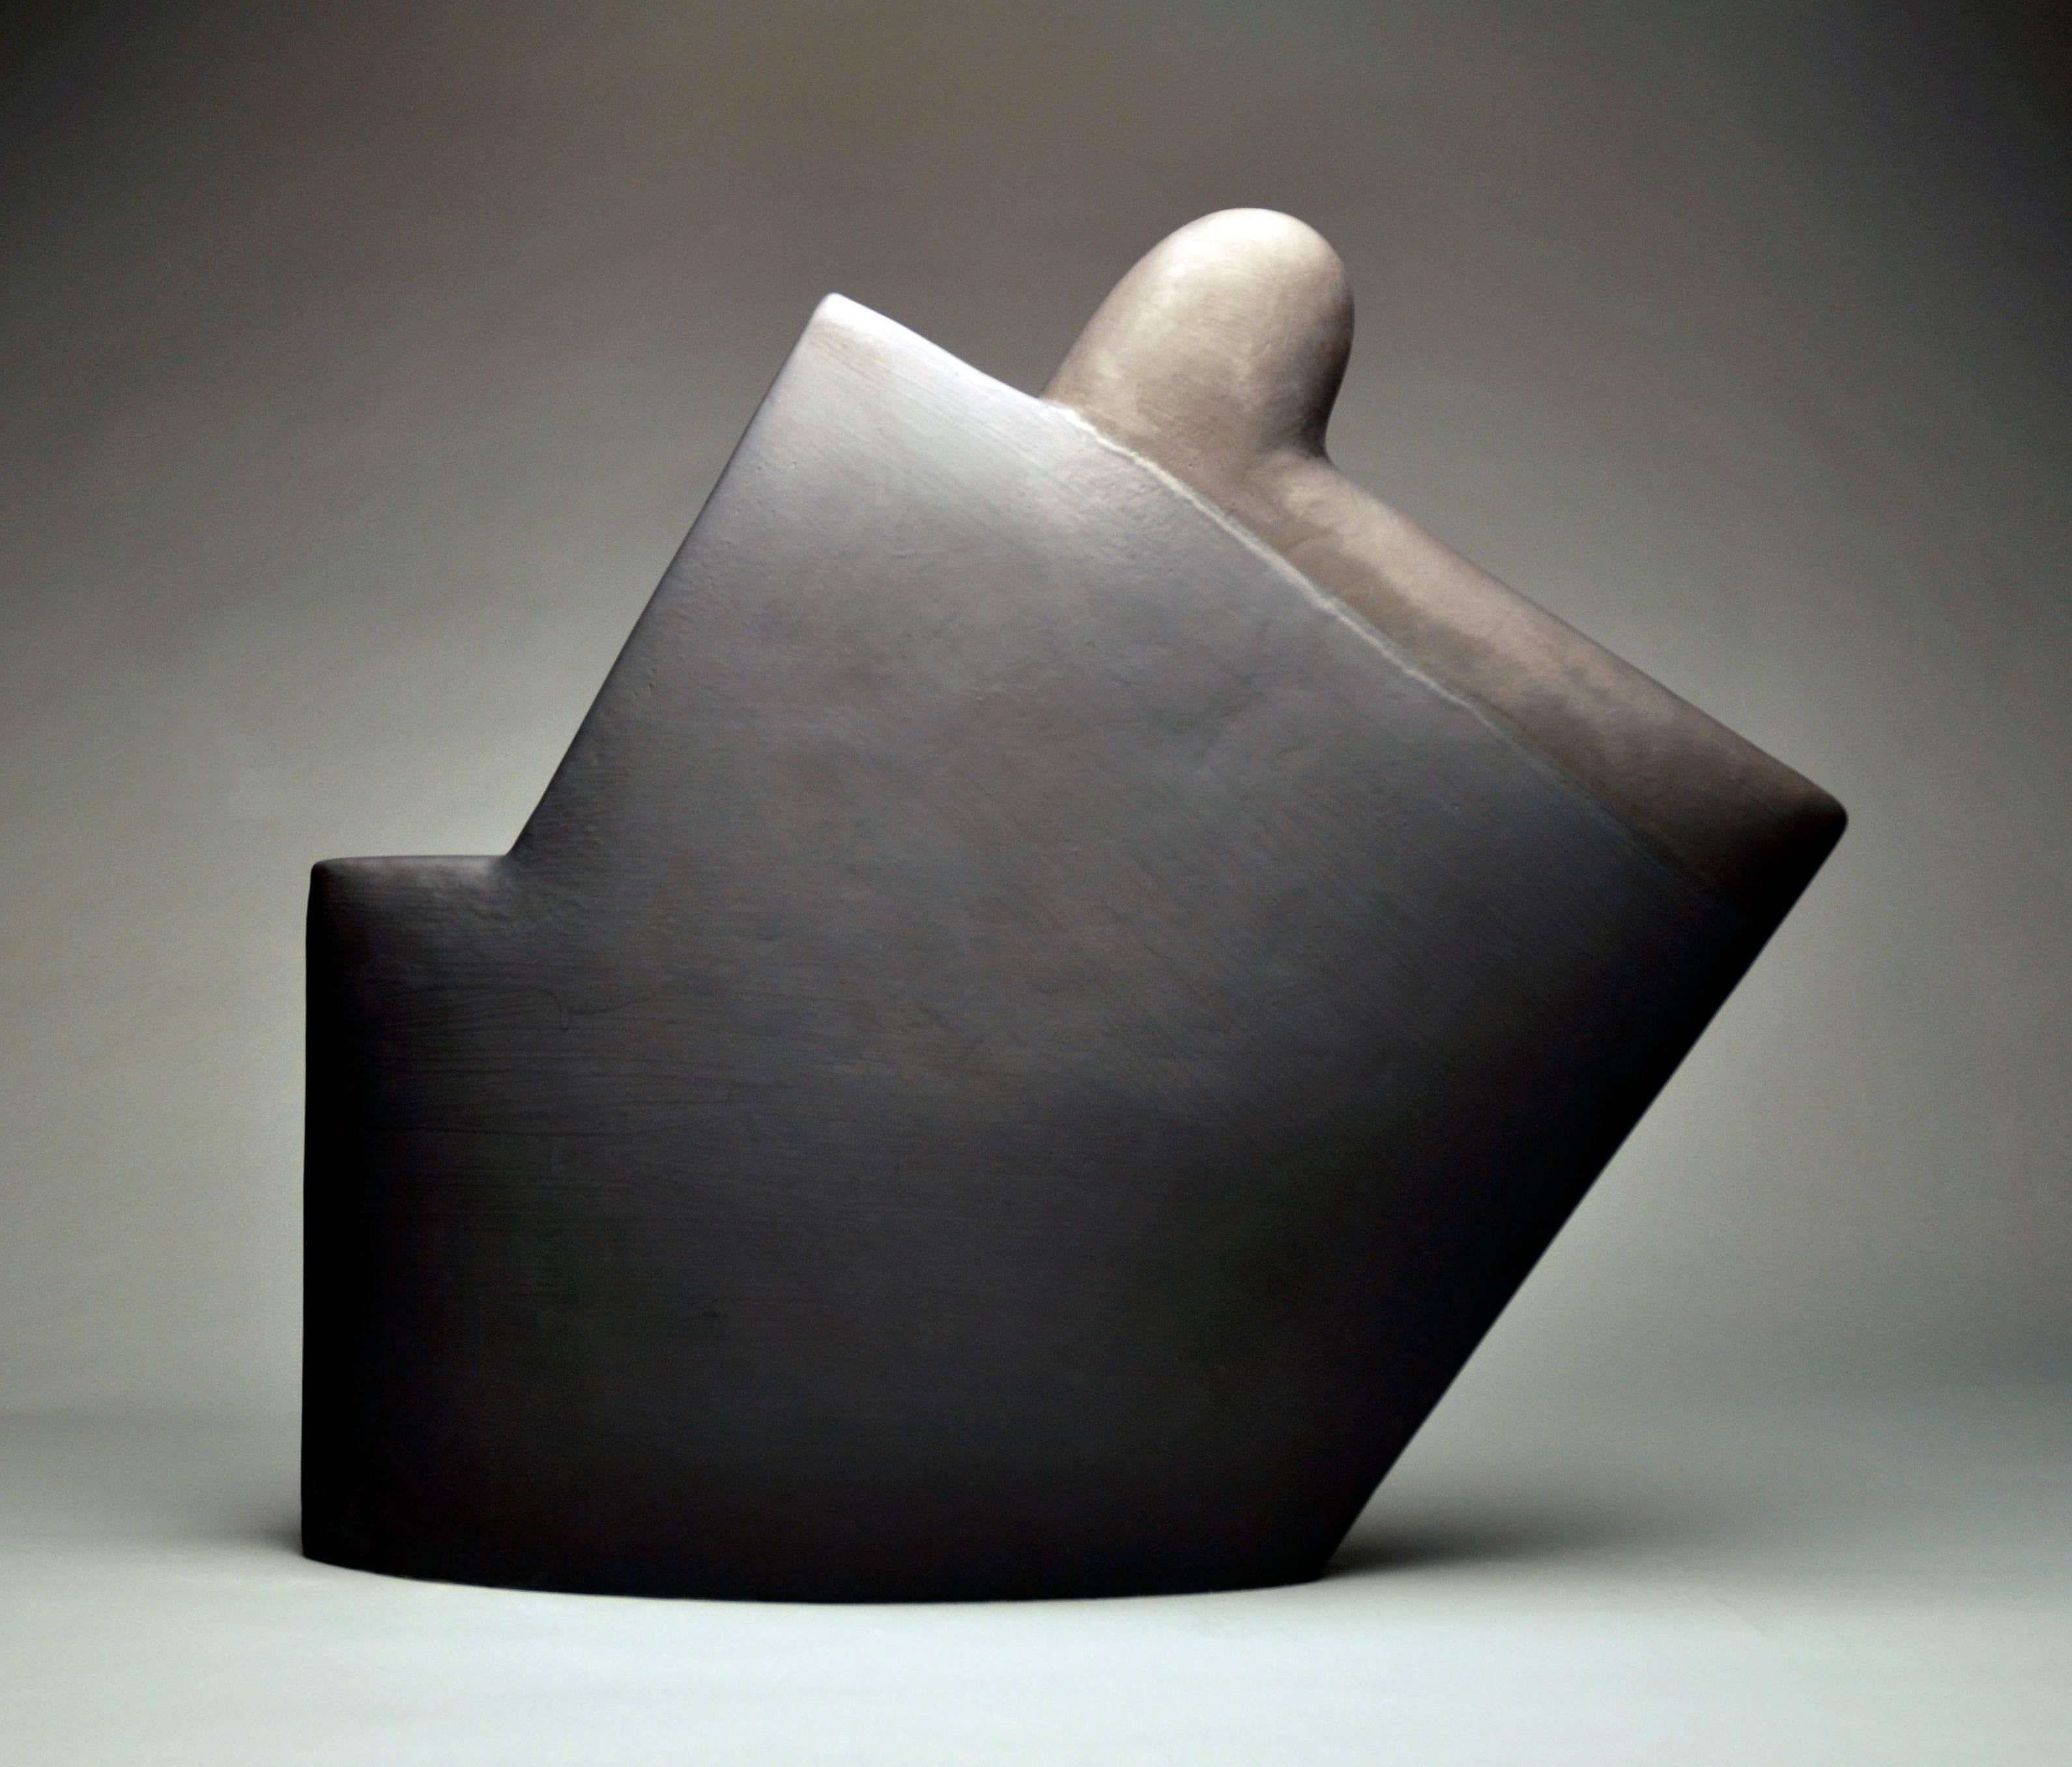 James Marshall Abstract Sculpture – "Black 401", Minimalistische Keramikskulptur, Liminalform, matte Glasuroberfläche